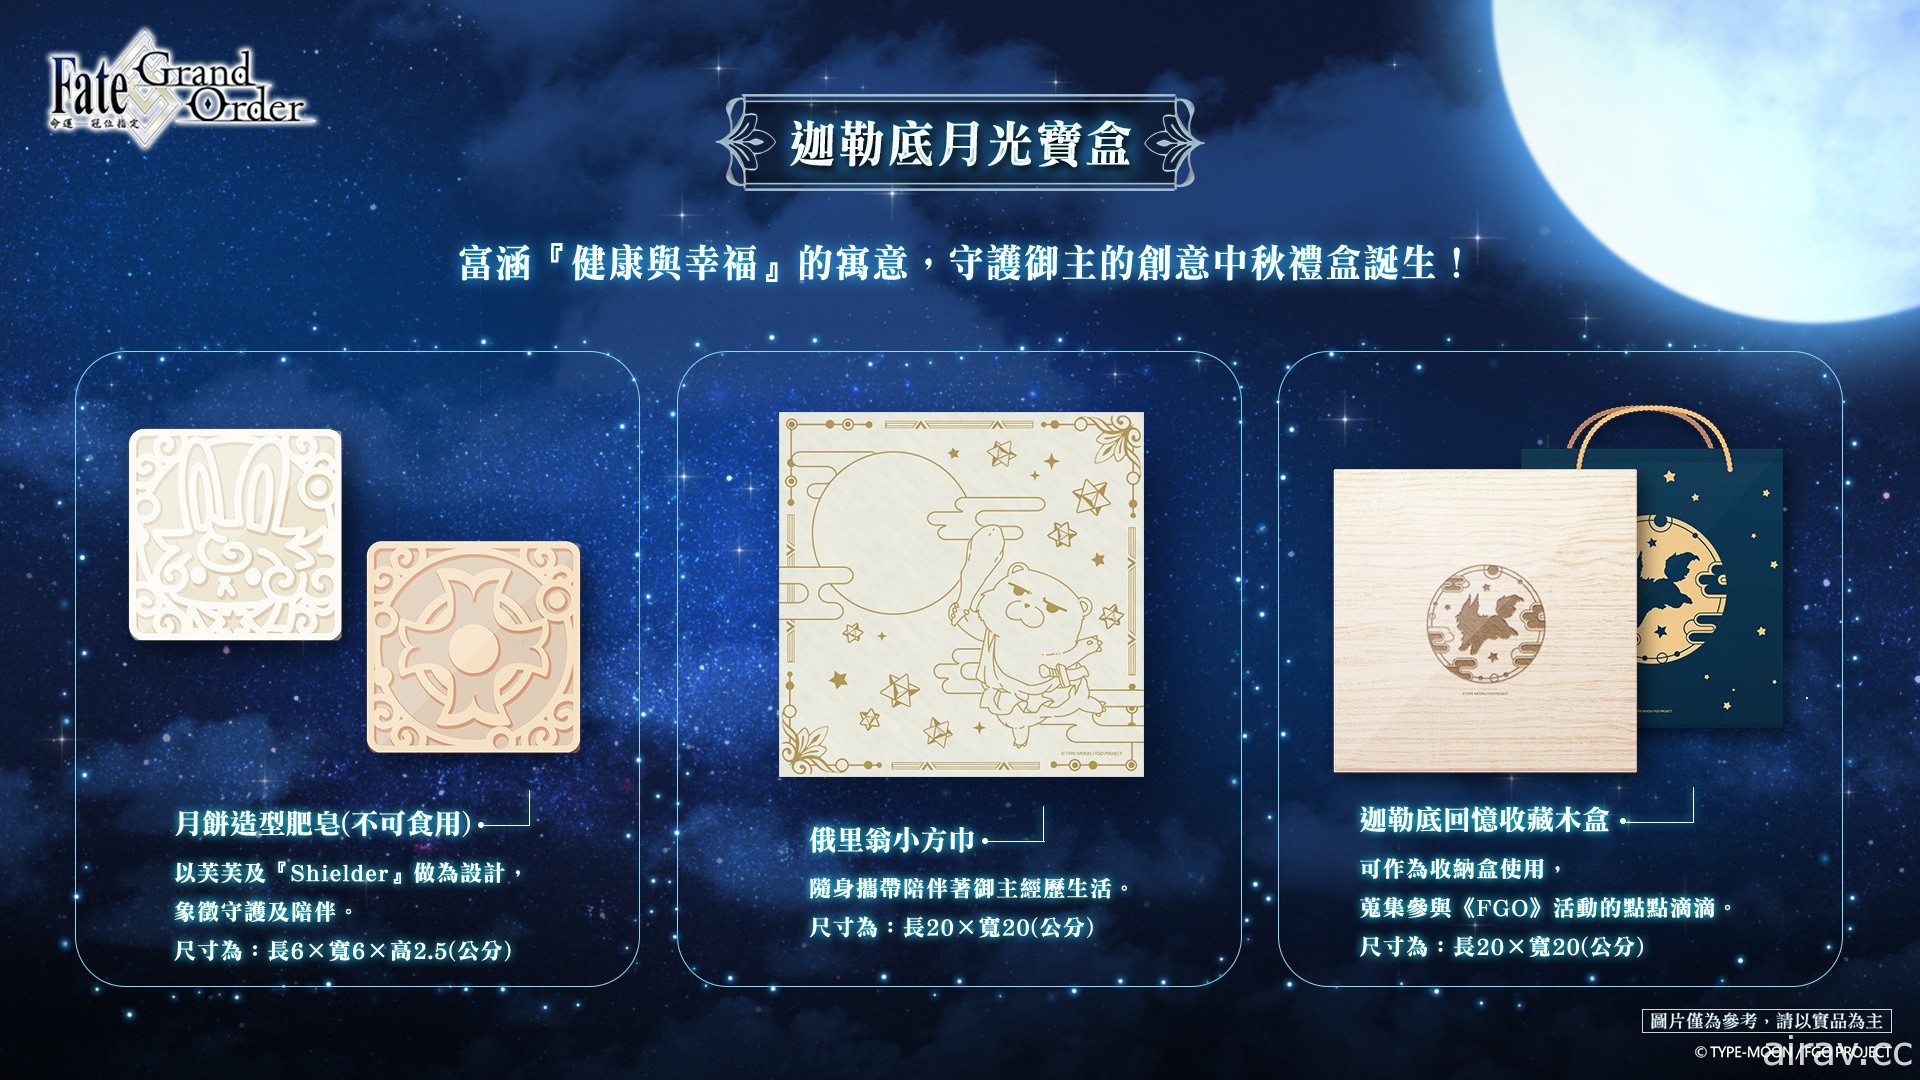 《Fate/Grand Order》繁中版将于 9 月 21 日举办迦勒底中秋节纪念活动